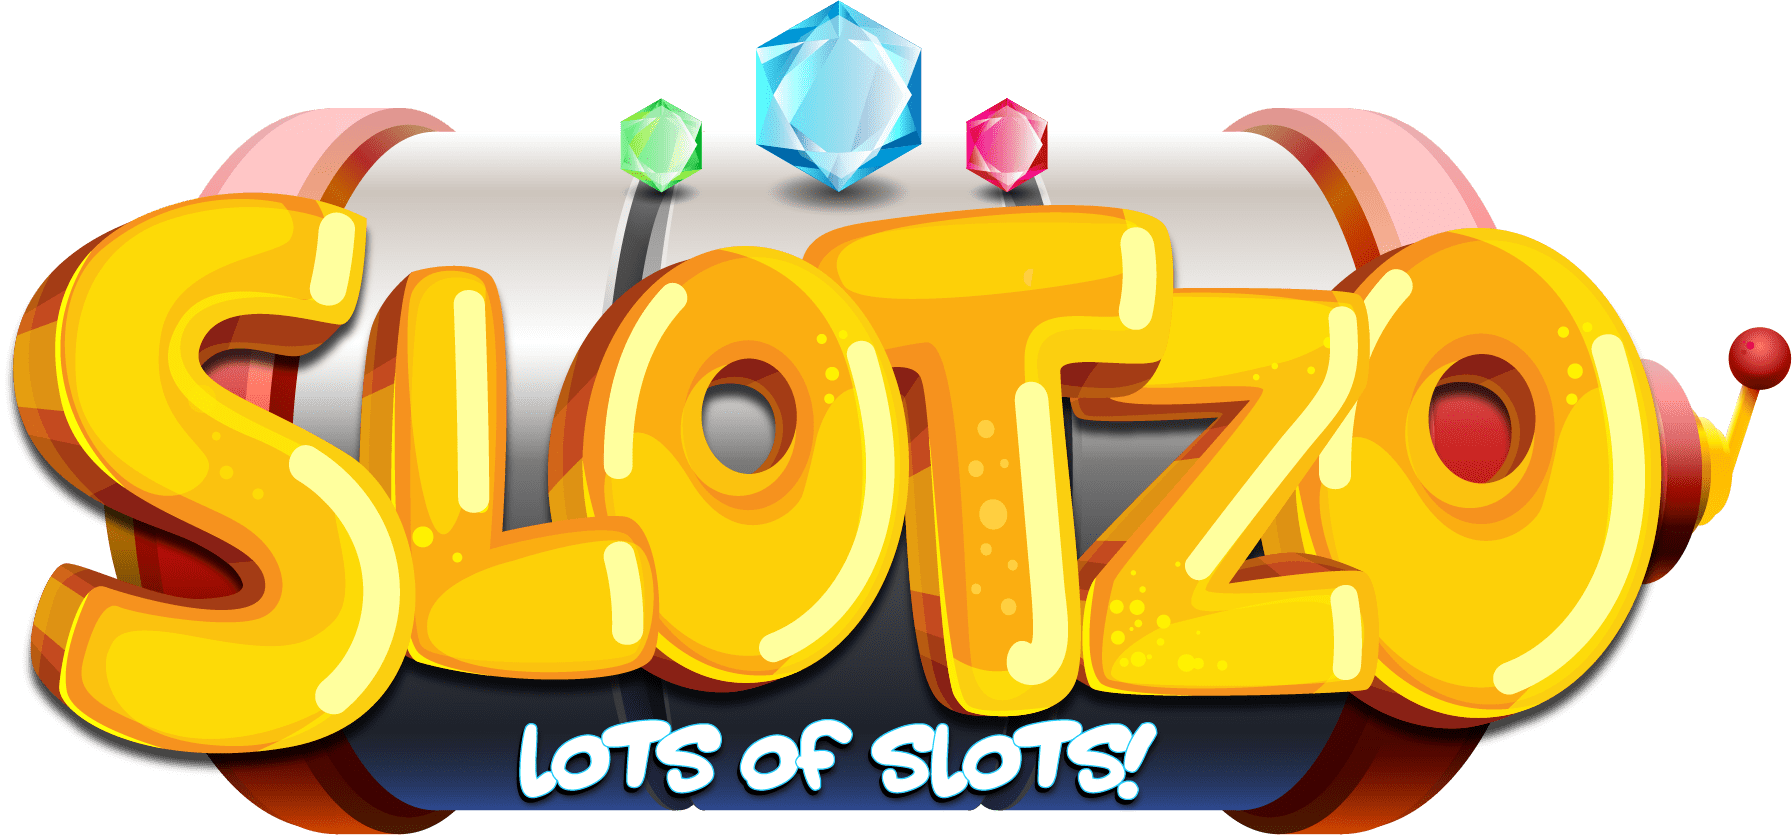 150 Bonus Spins Welcome Package Slotzo